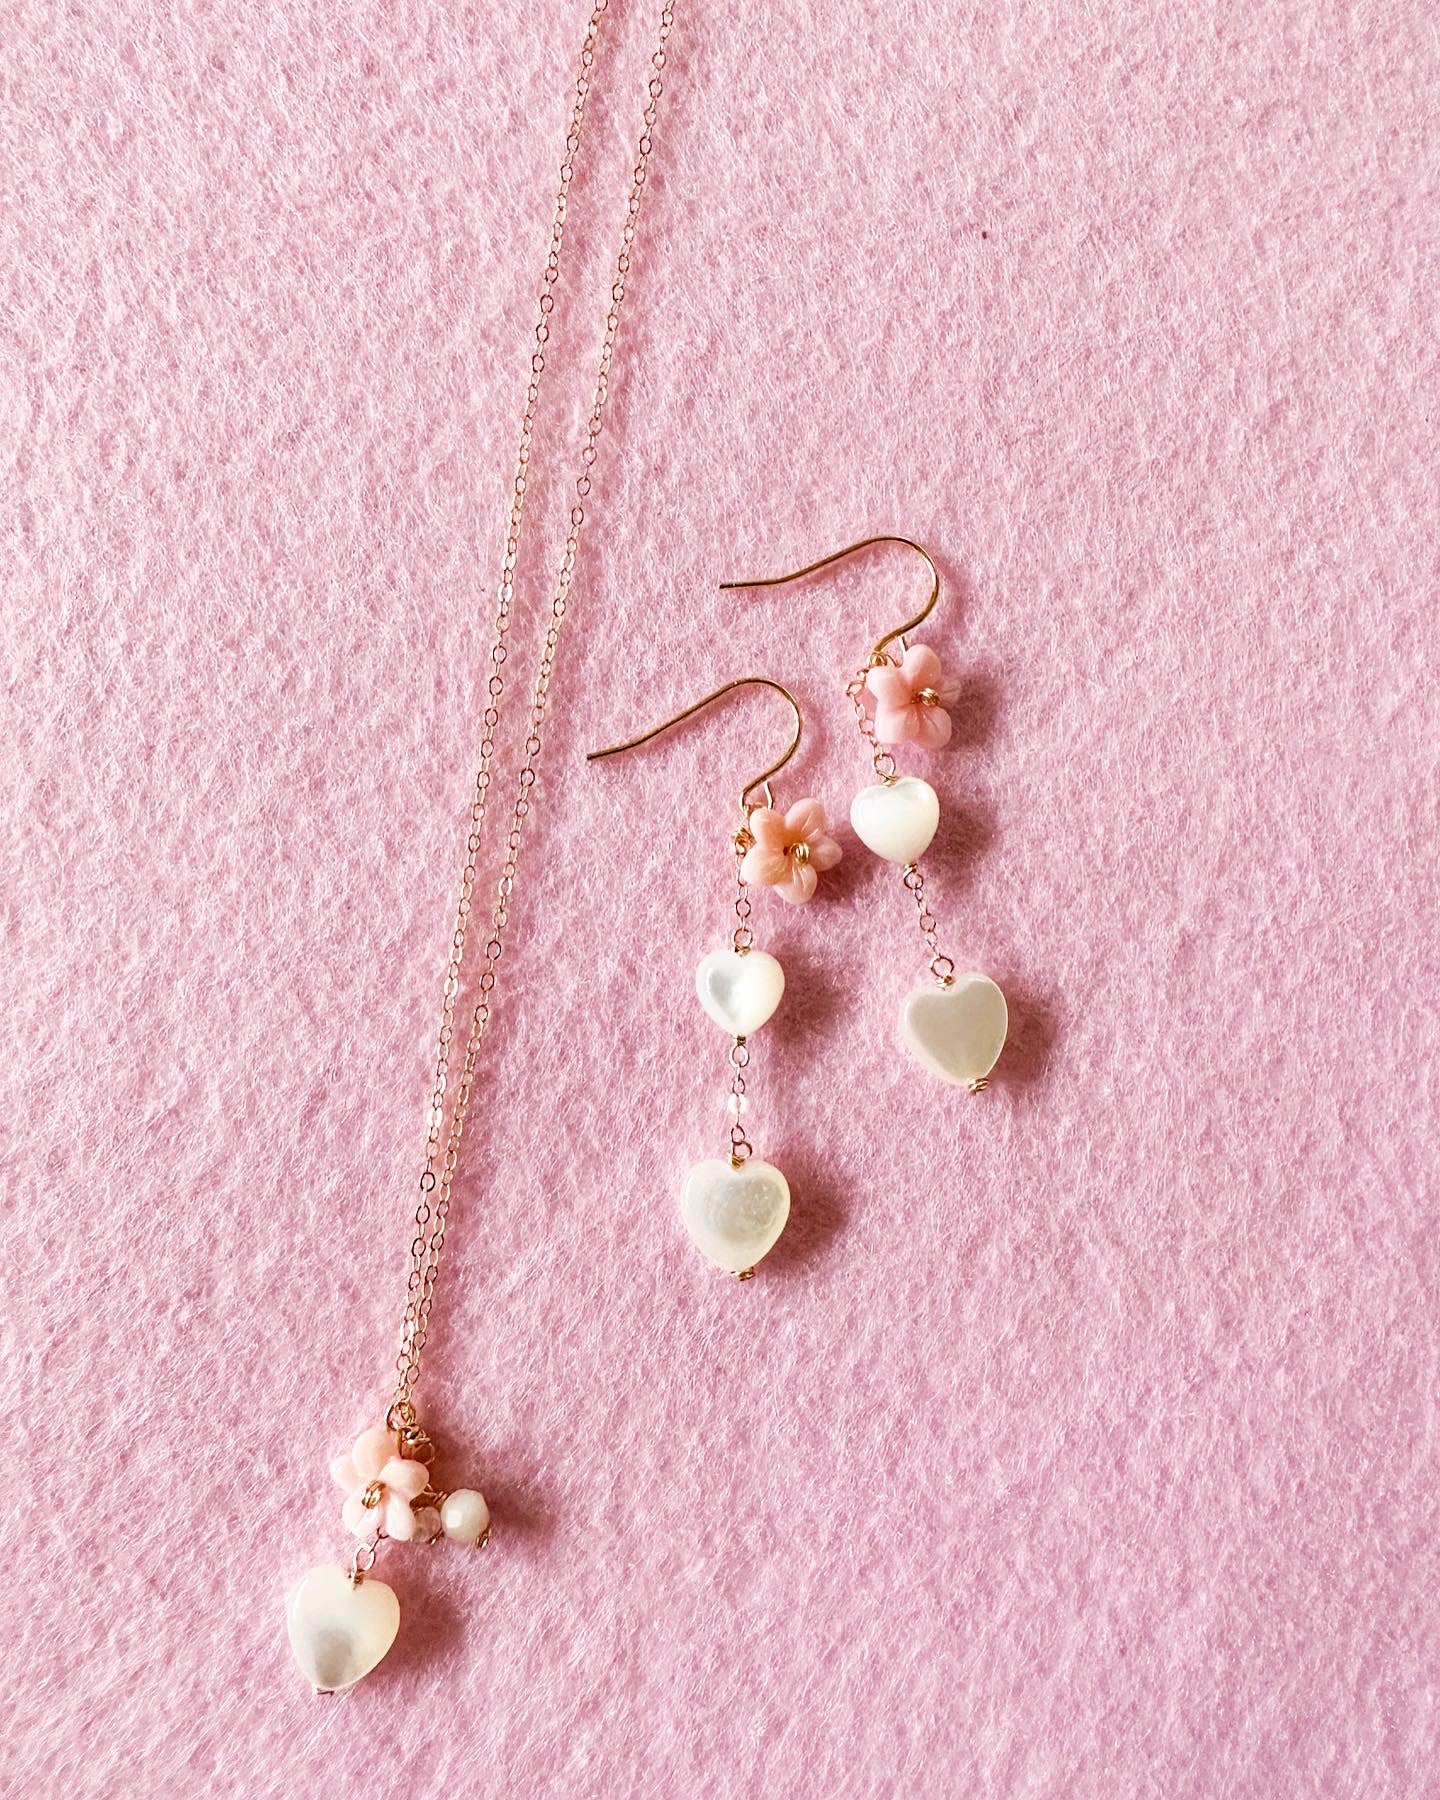 Pink Conch Shell Flower & Puffy Heart Shell Earrings